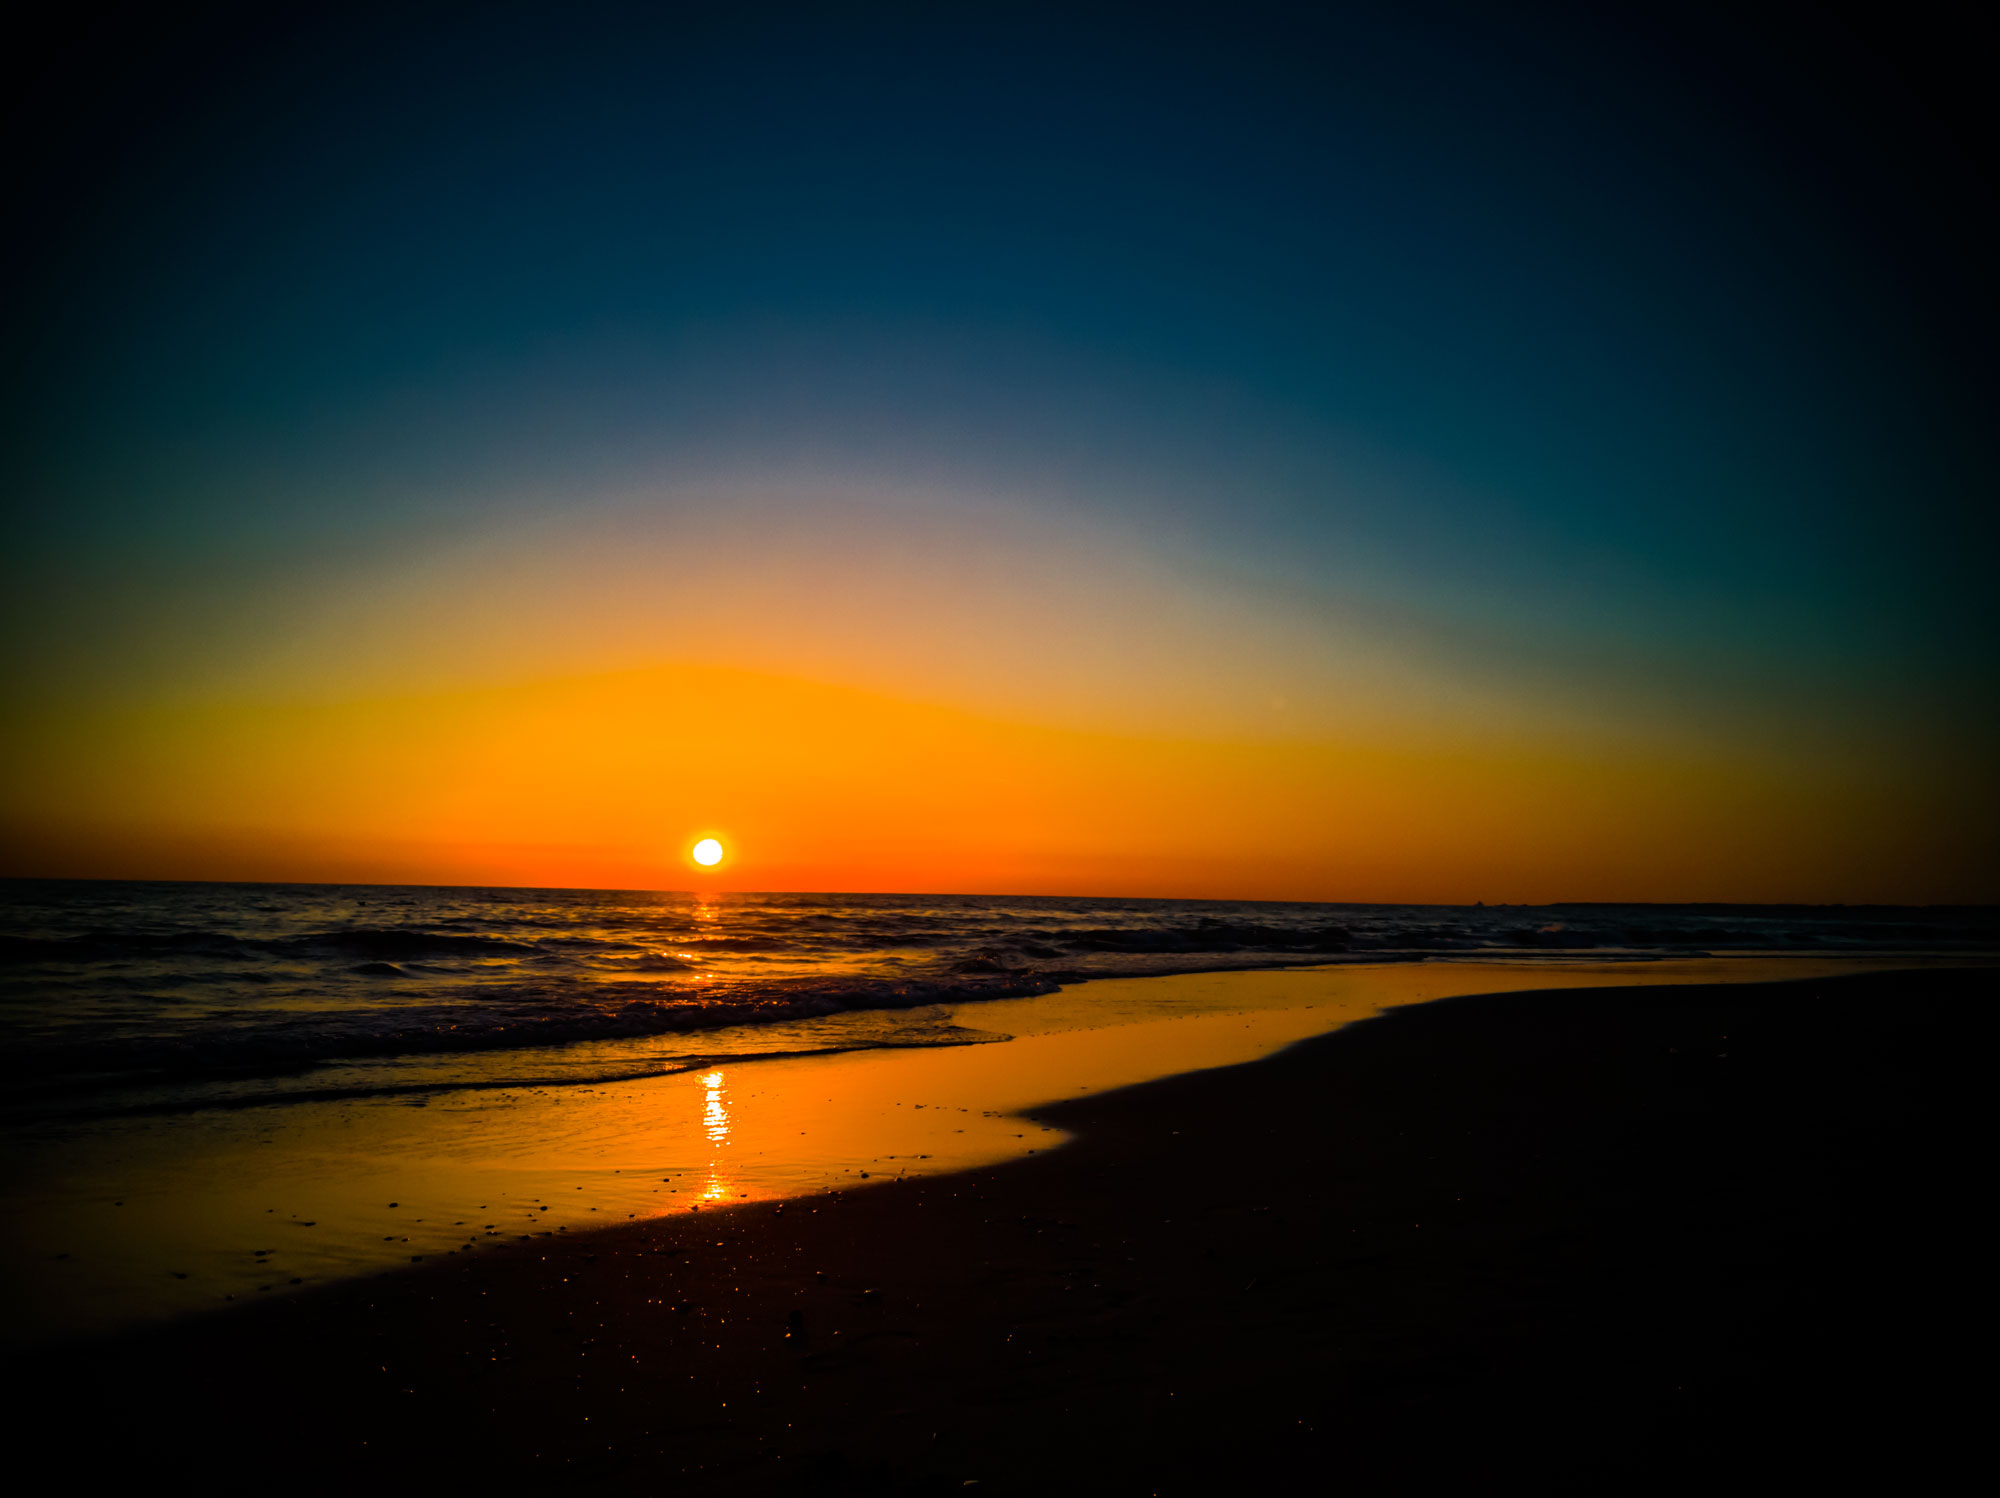 Tramonto Lido di Latina foto al tramonto immagini di tramonto foto di tramonti sul mare mare al tramonto tramonti onde del mare al tramonto colori al tramonto